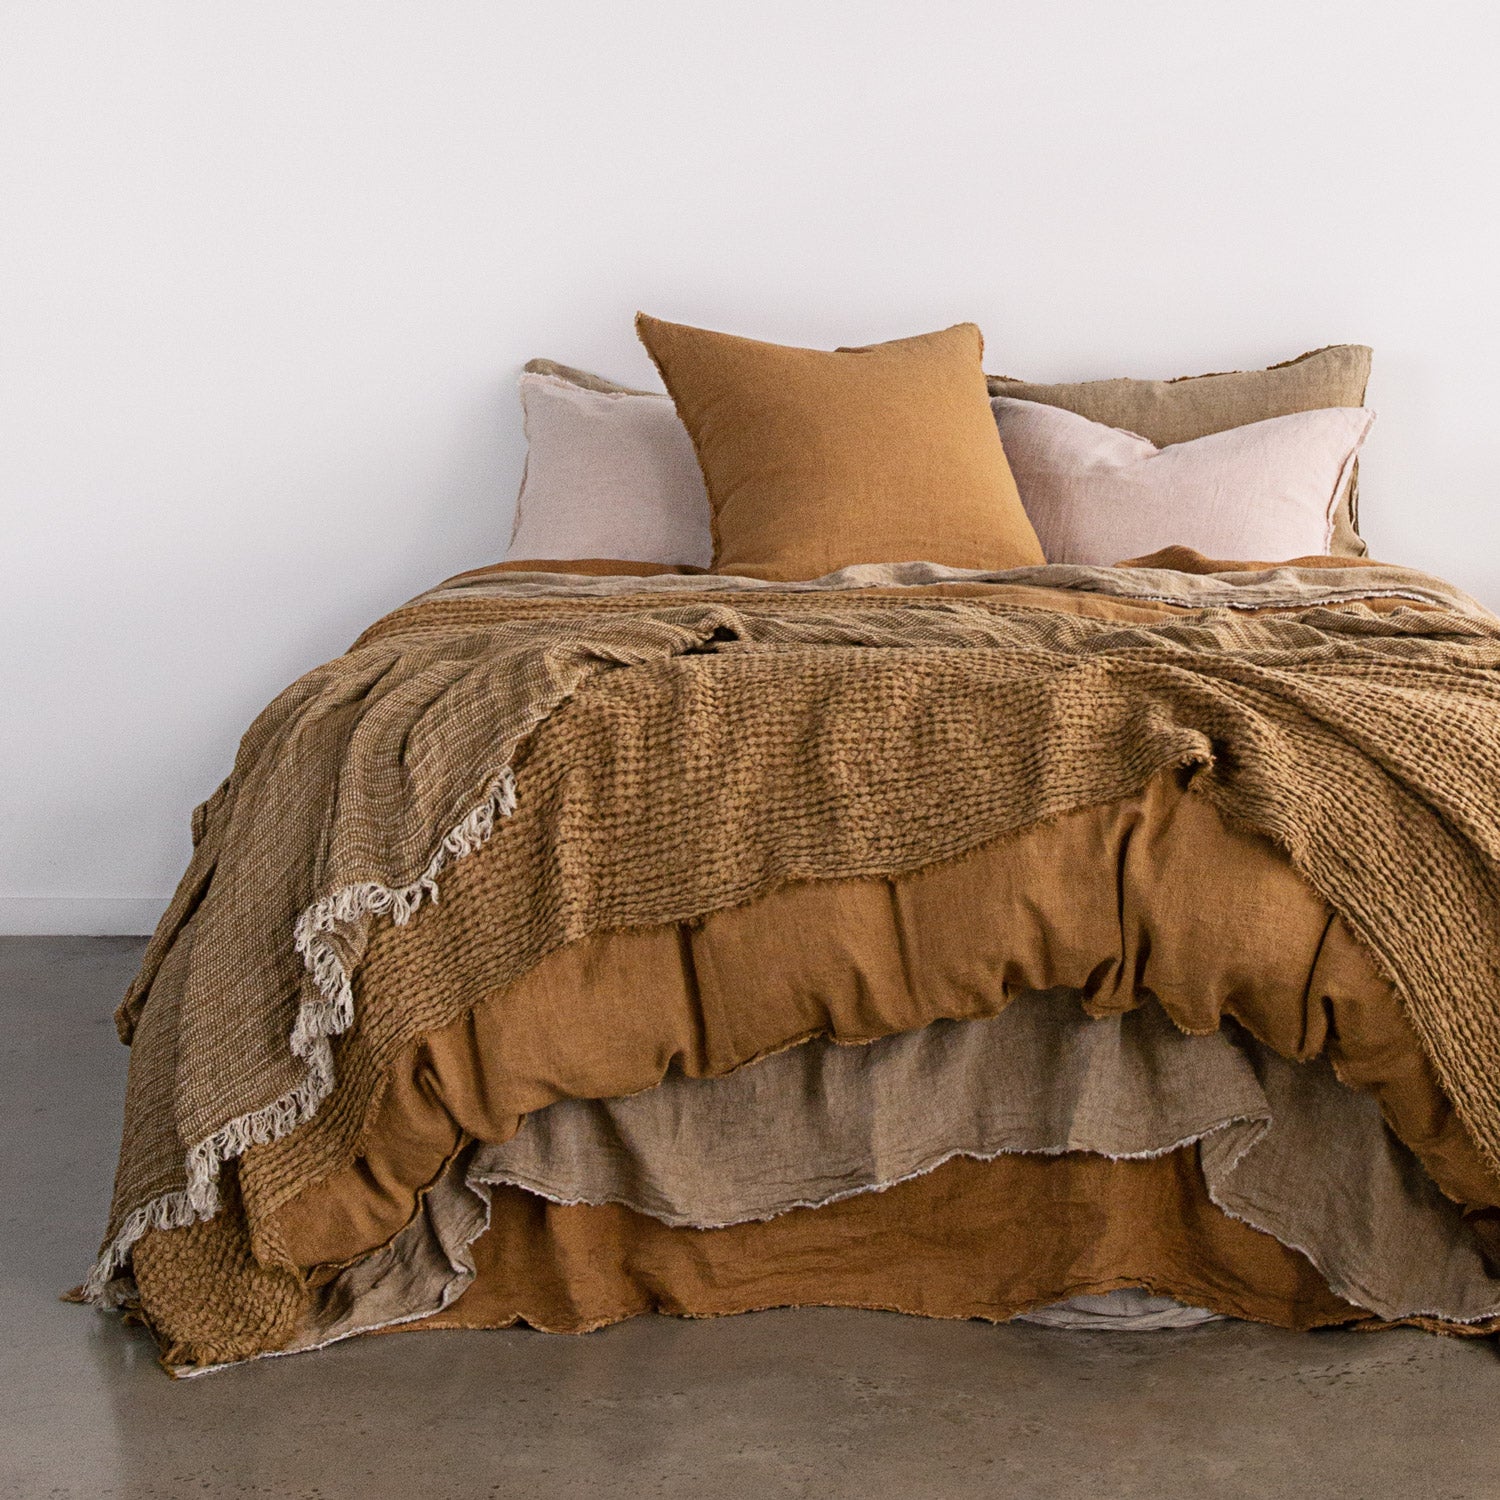 Flocca Linen Pillowcase | Earthy Pink  | Hale Mercantile Co.